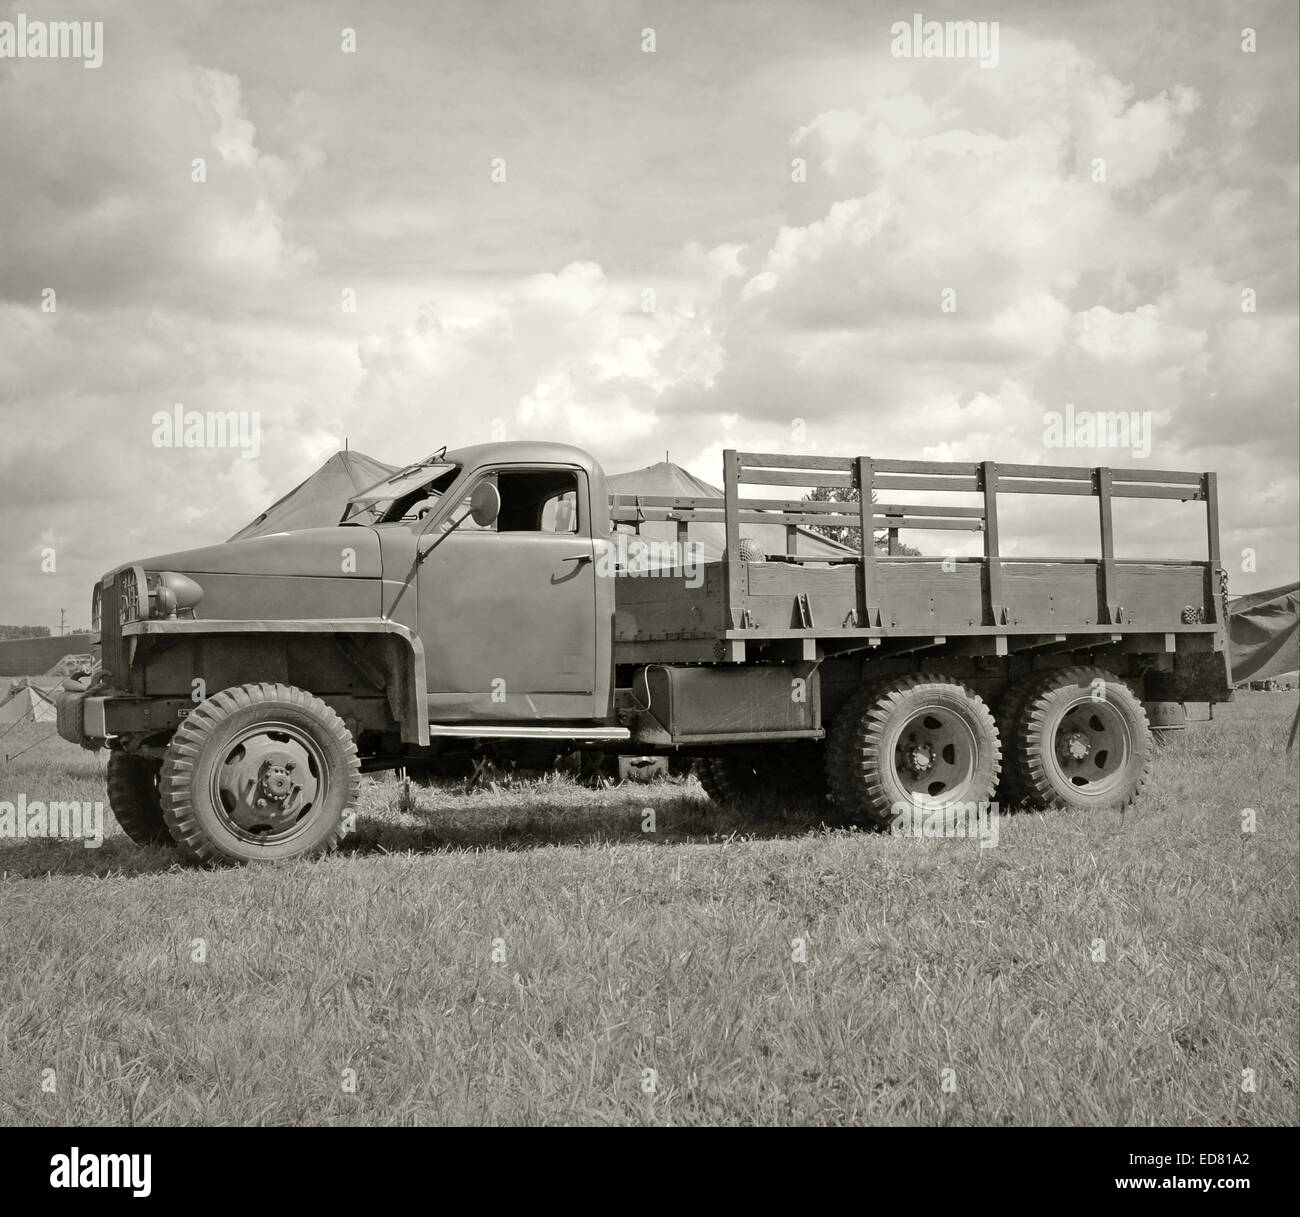 World War 2 era military truck side view black and white Stock Photo